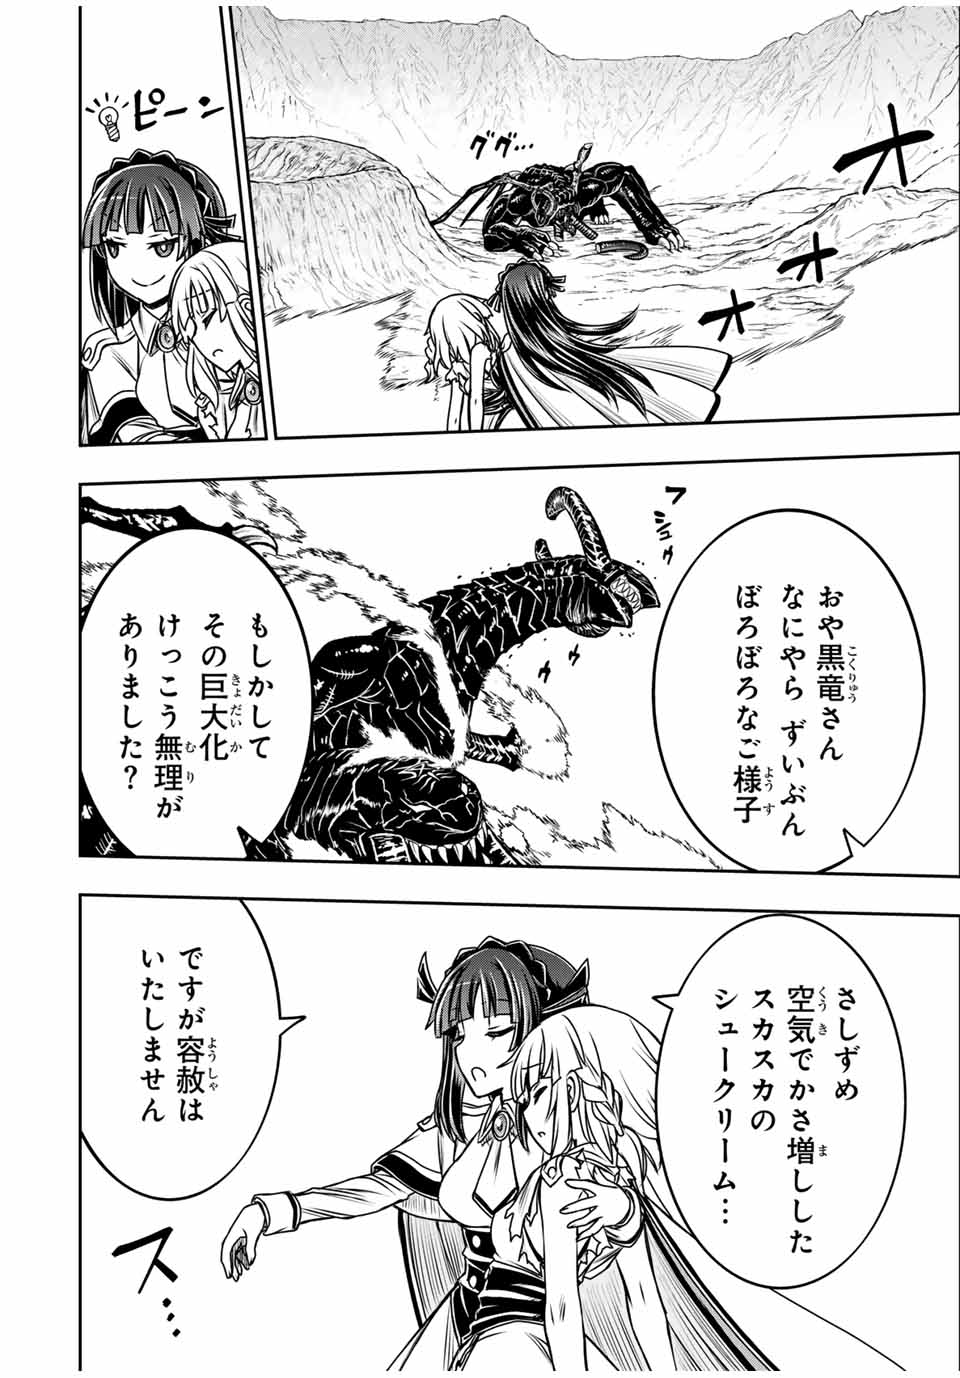 Nengan no Akuyaku Reijou (Last Boss) no Karada wo Teniiretazo!  - Chapter 23 - Page 16